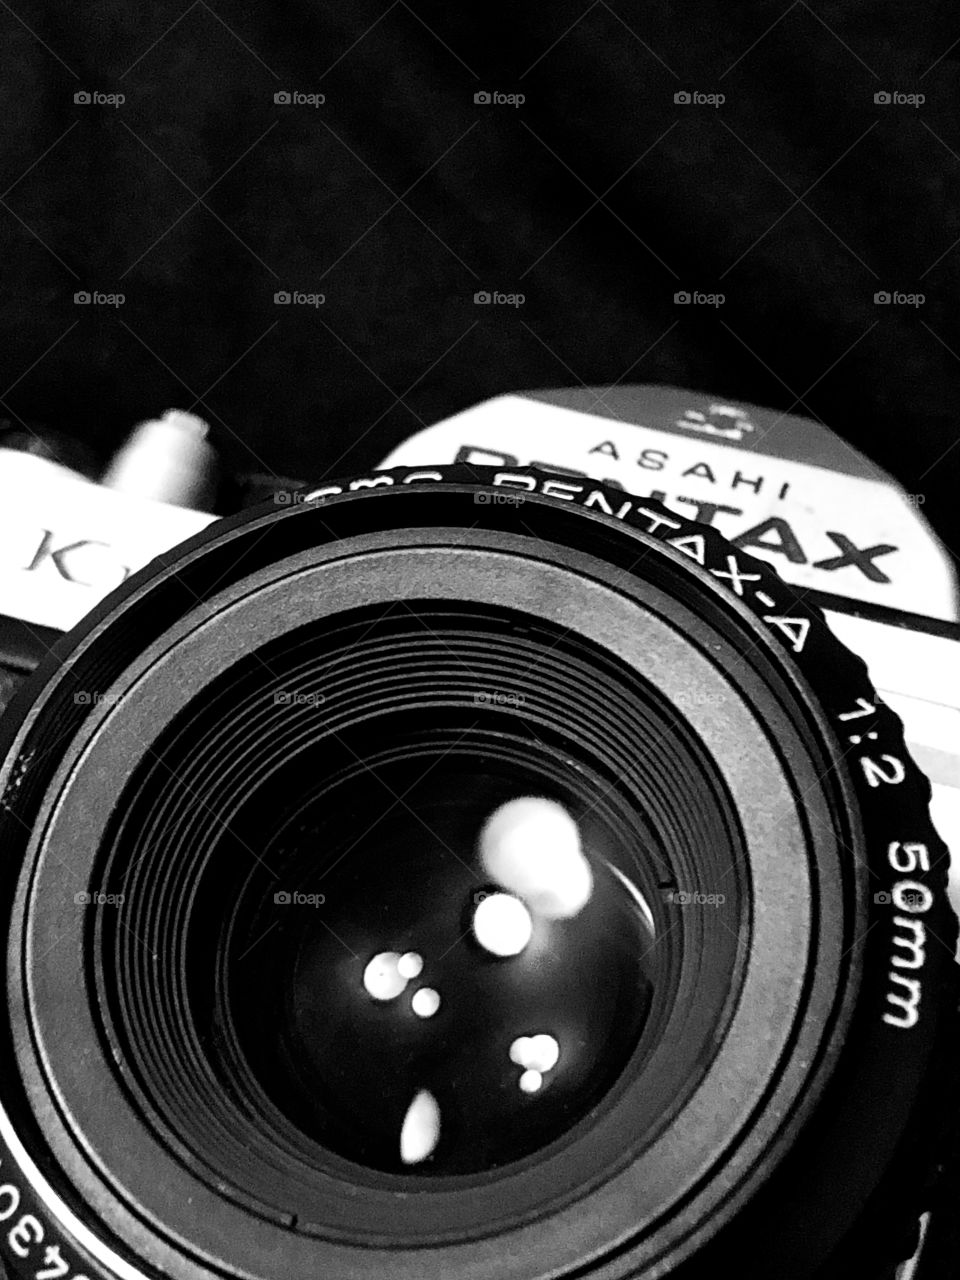 Pentax k1000 manual film camera; black and white photo